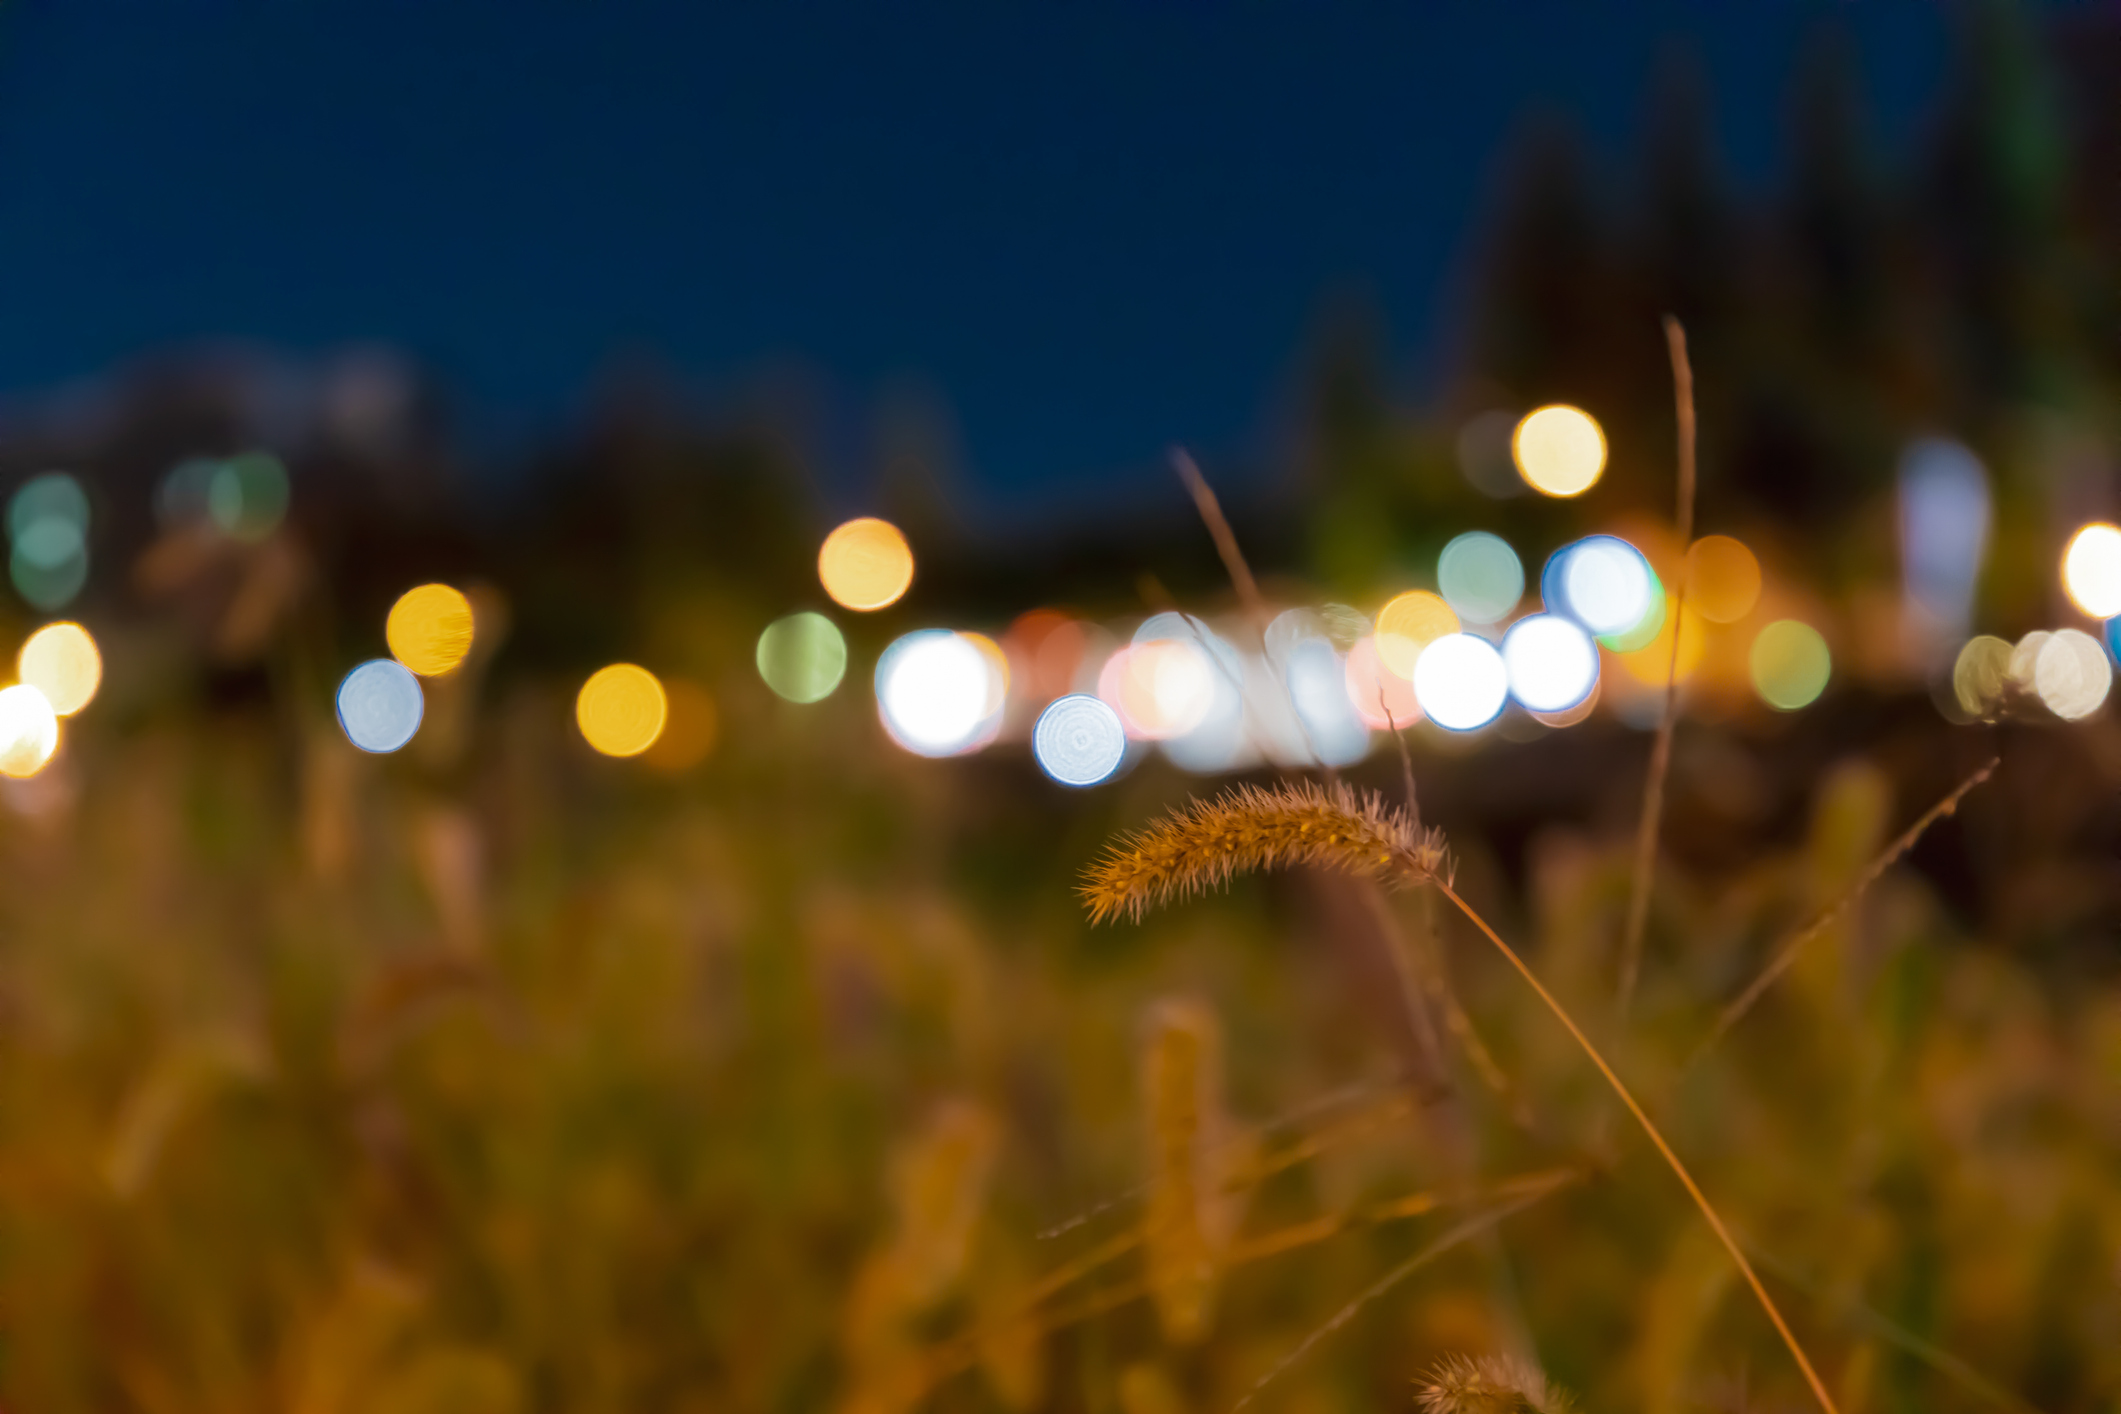 Grass and lights © kwangho kim/iStock